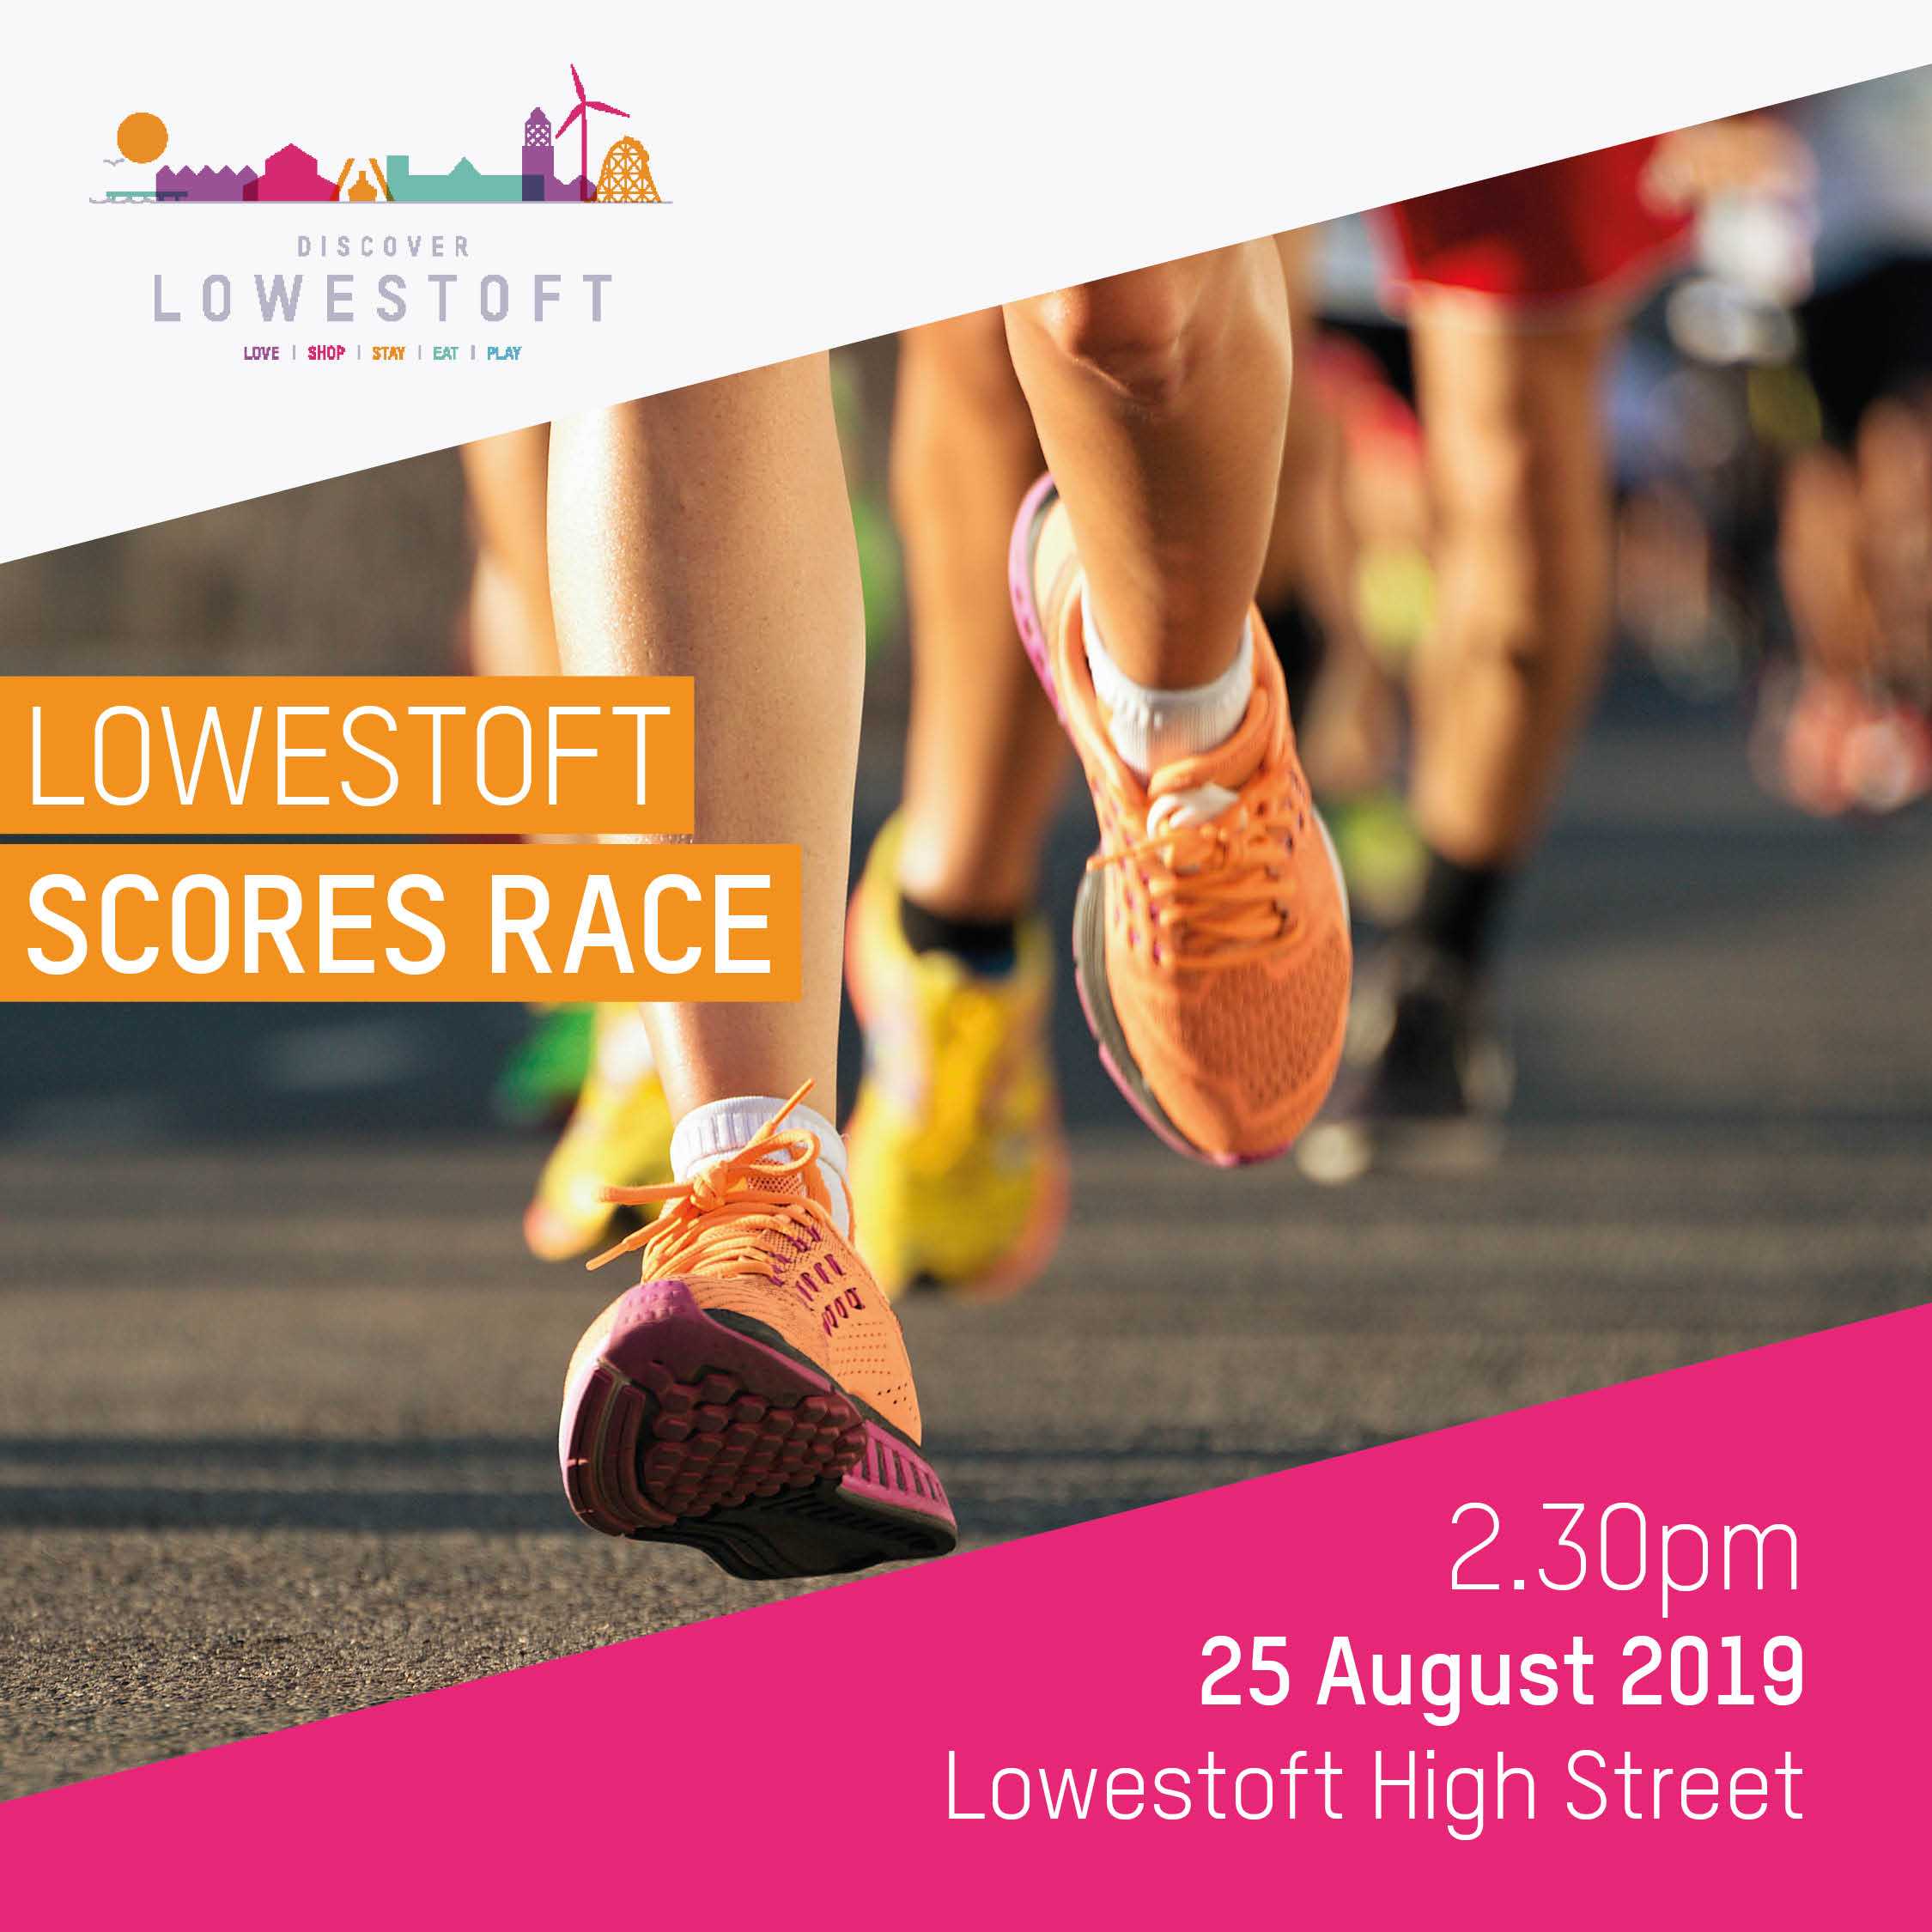 Lowestoft Scores Race 2019 Image